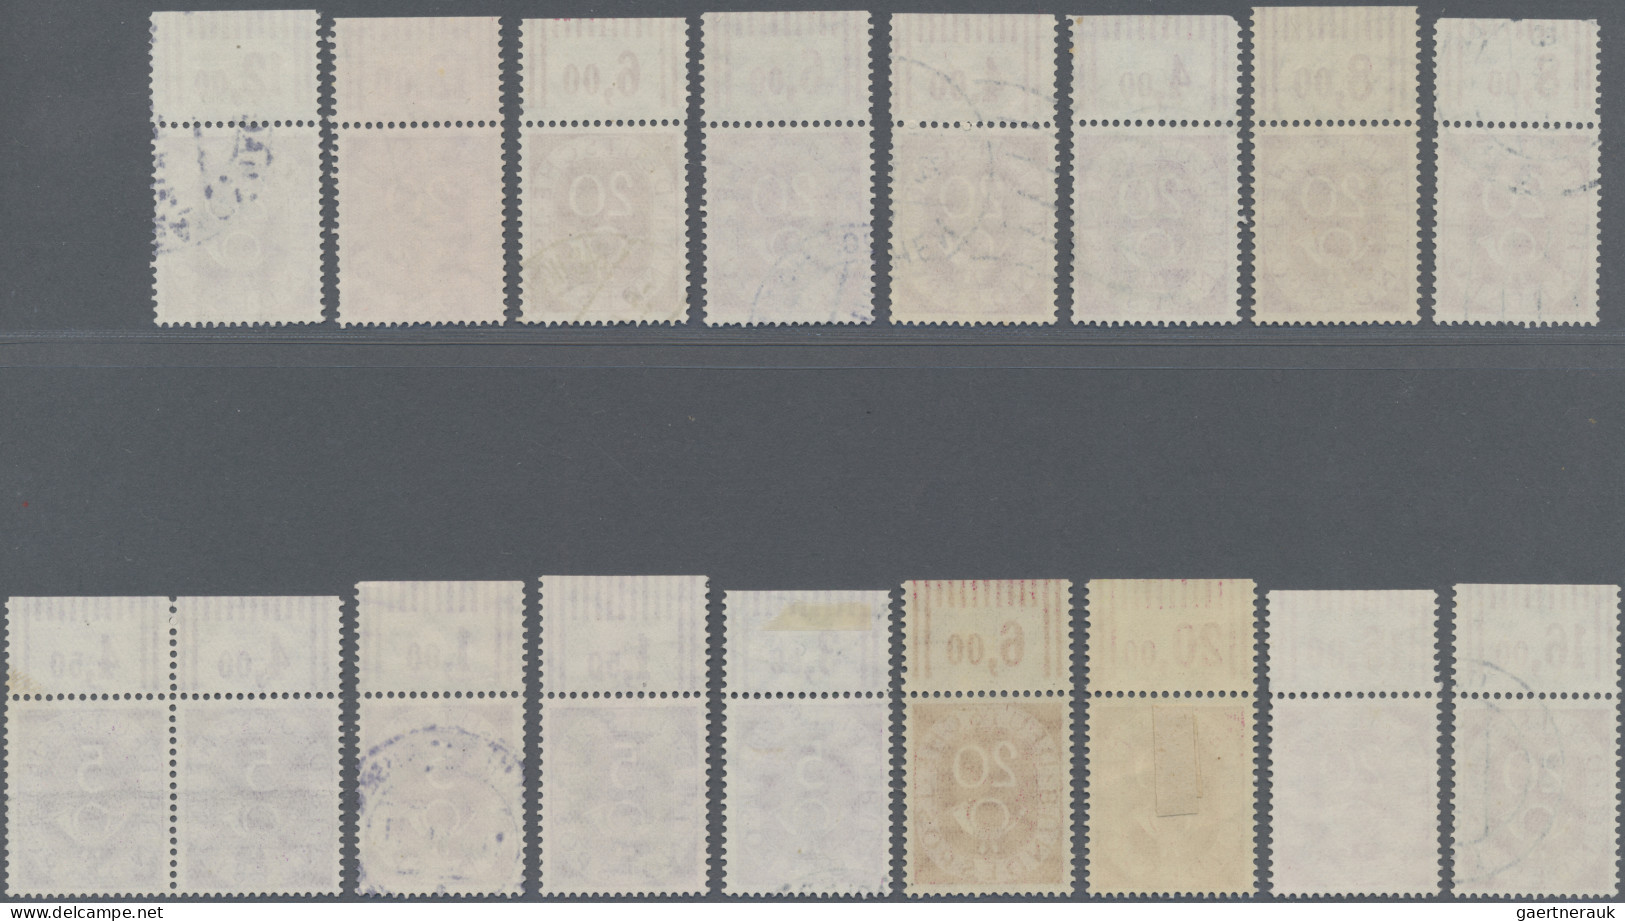 Bundesrepublik Deutschland: 1951, Posthorn 5(Pf), 5 Gestempelte Marken Vom Oberr - Used Stamps